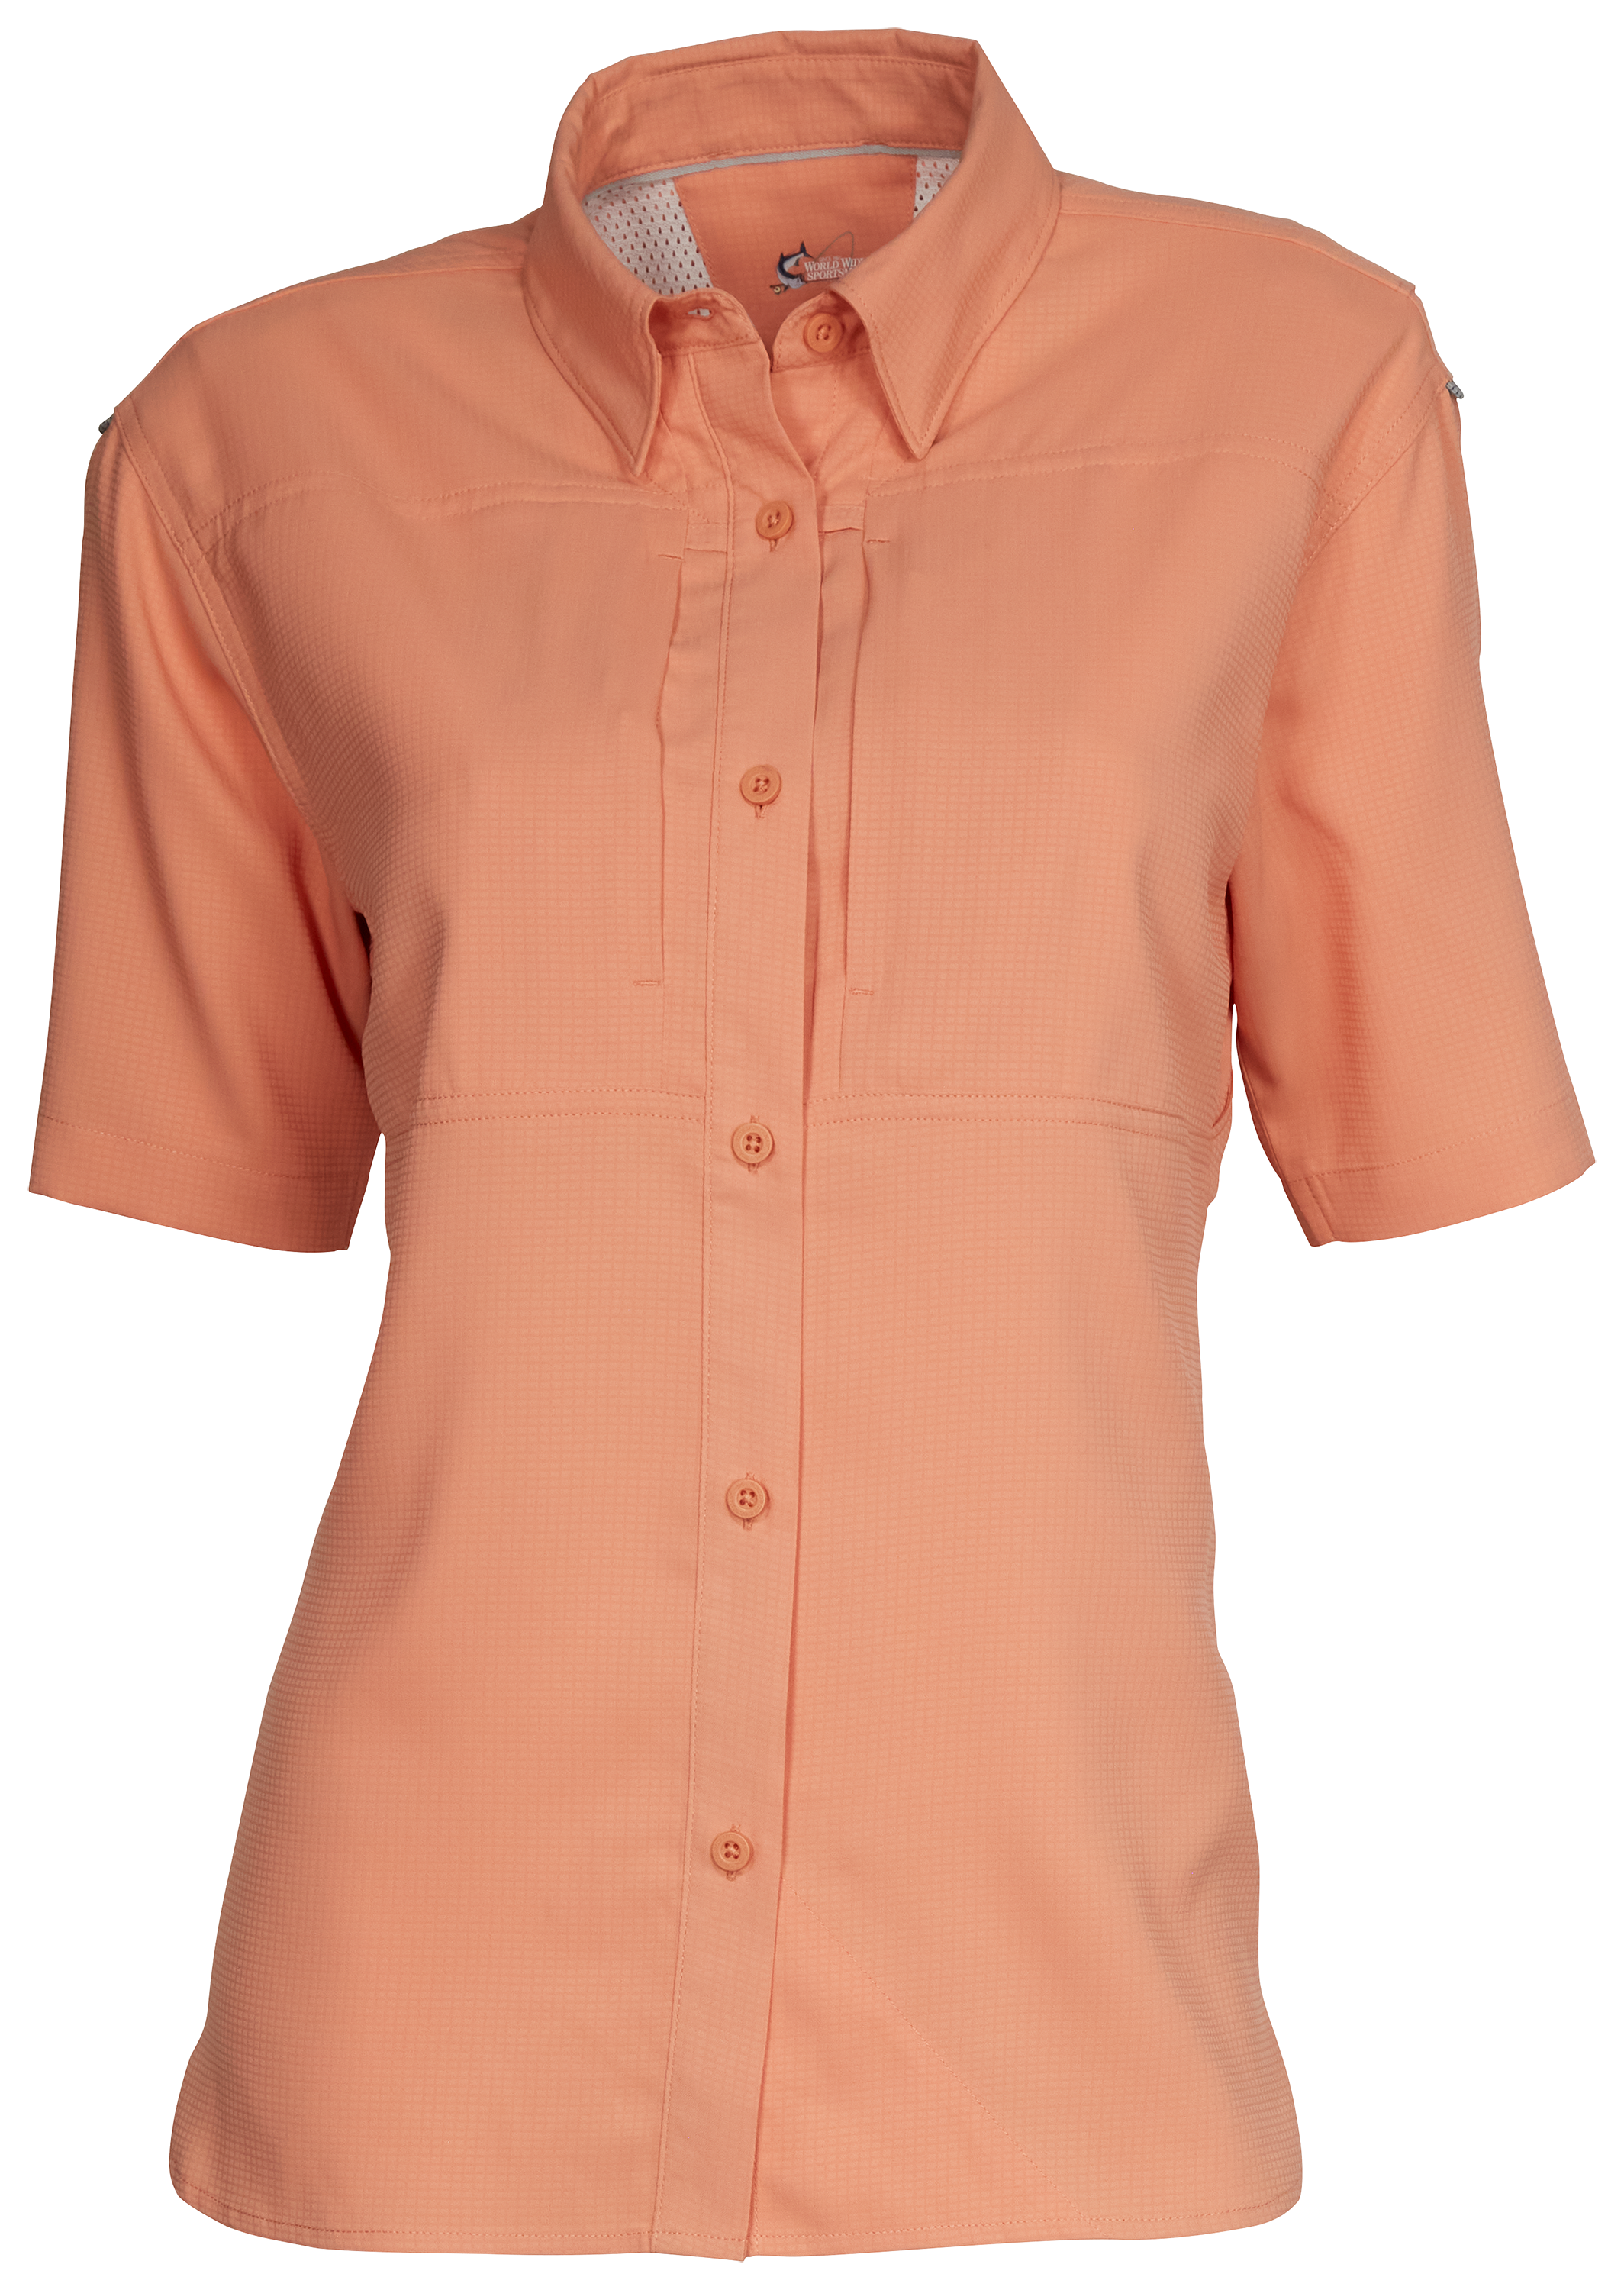 World Wide Sportsman Marina Short-Sleeve Shirt for Ladies - Canyon Sunset - XL